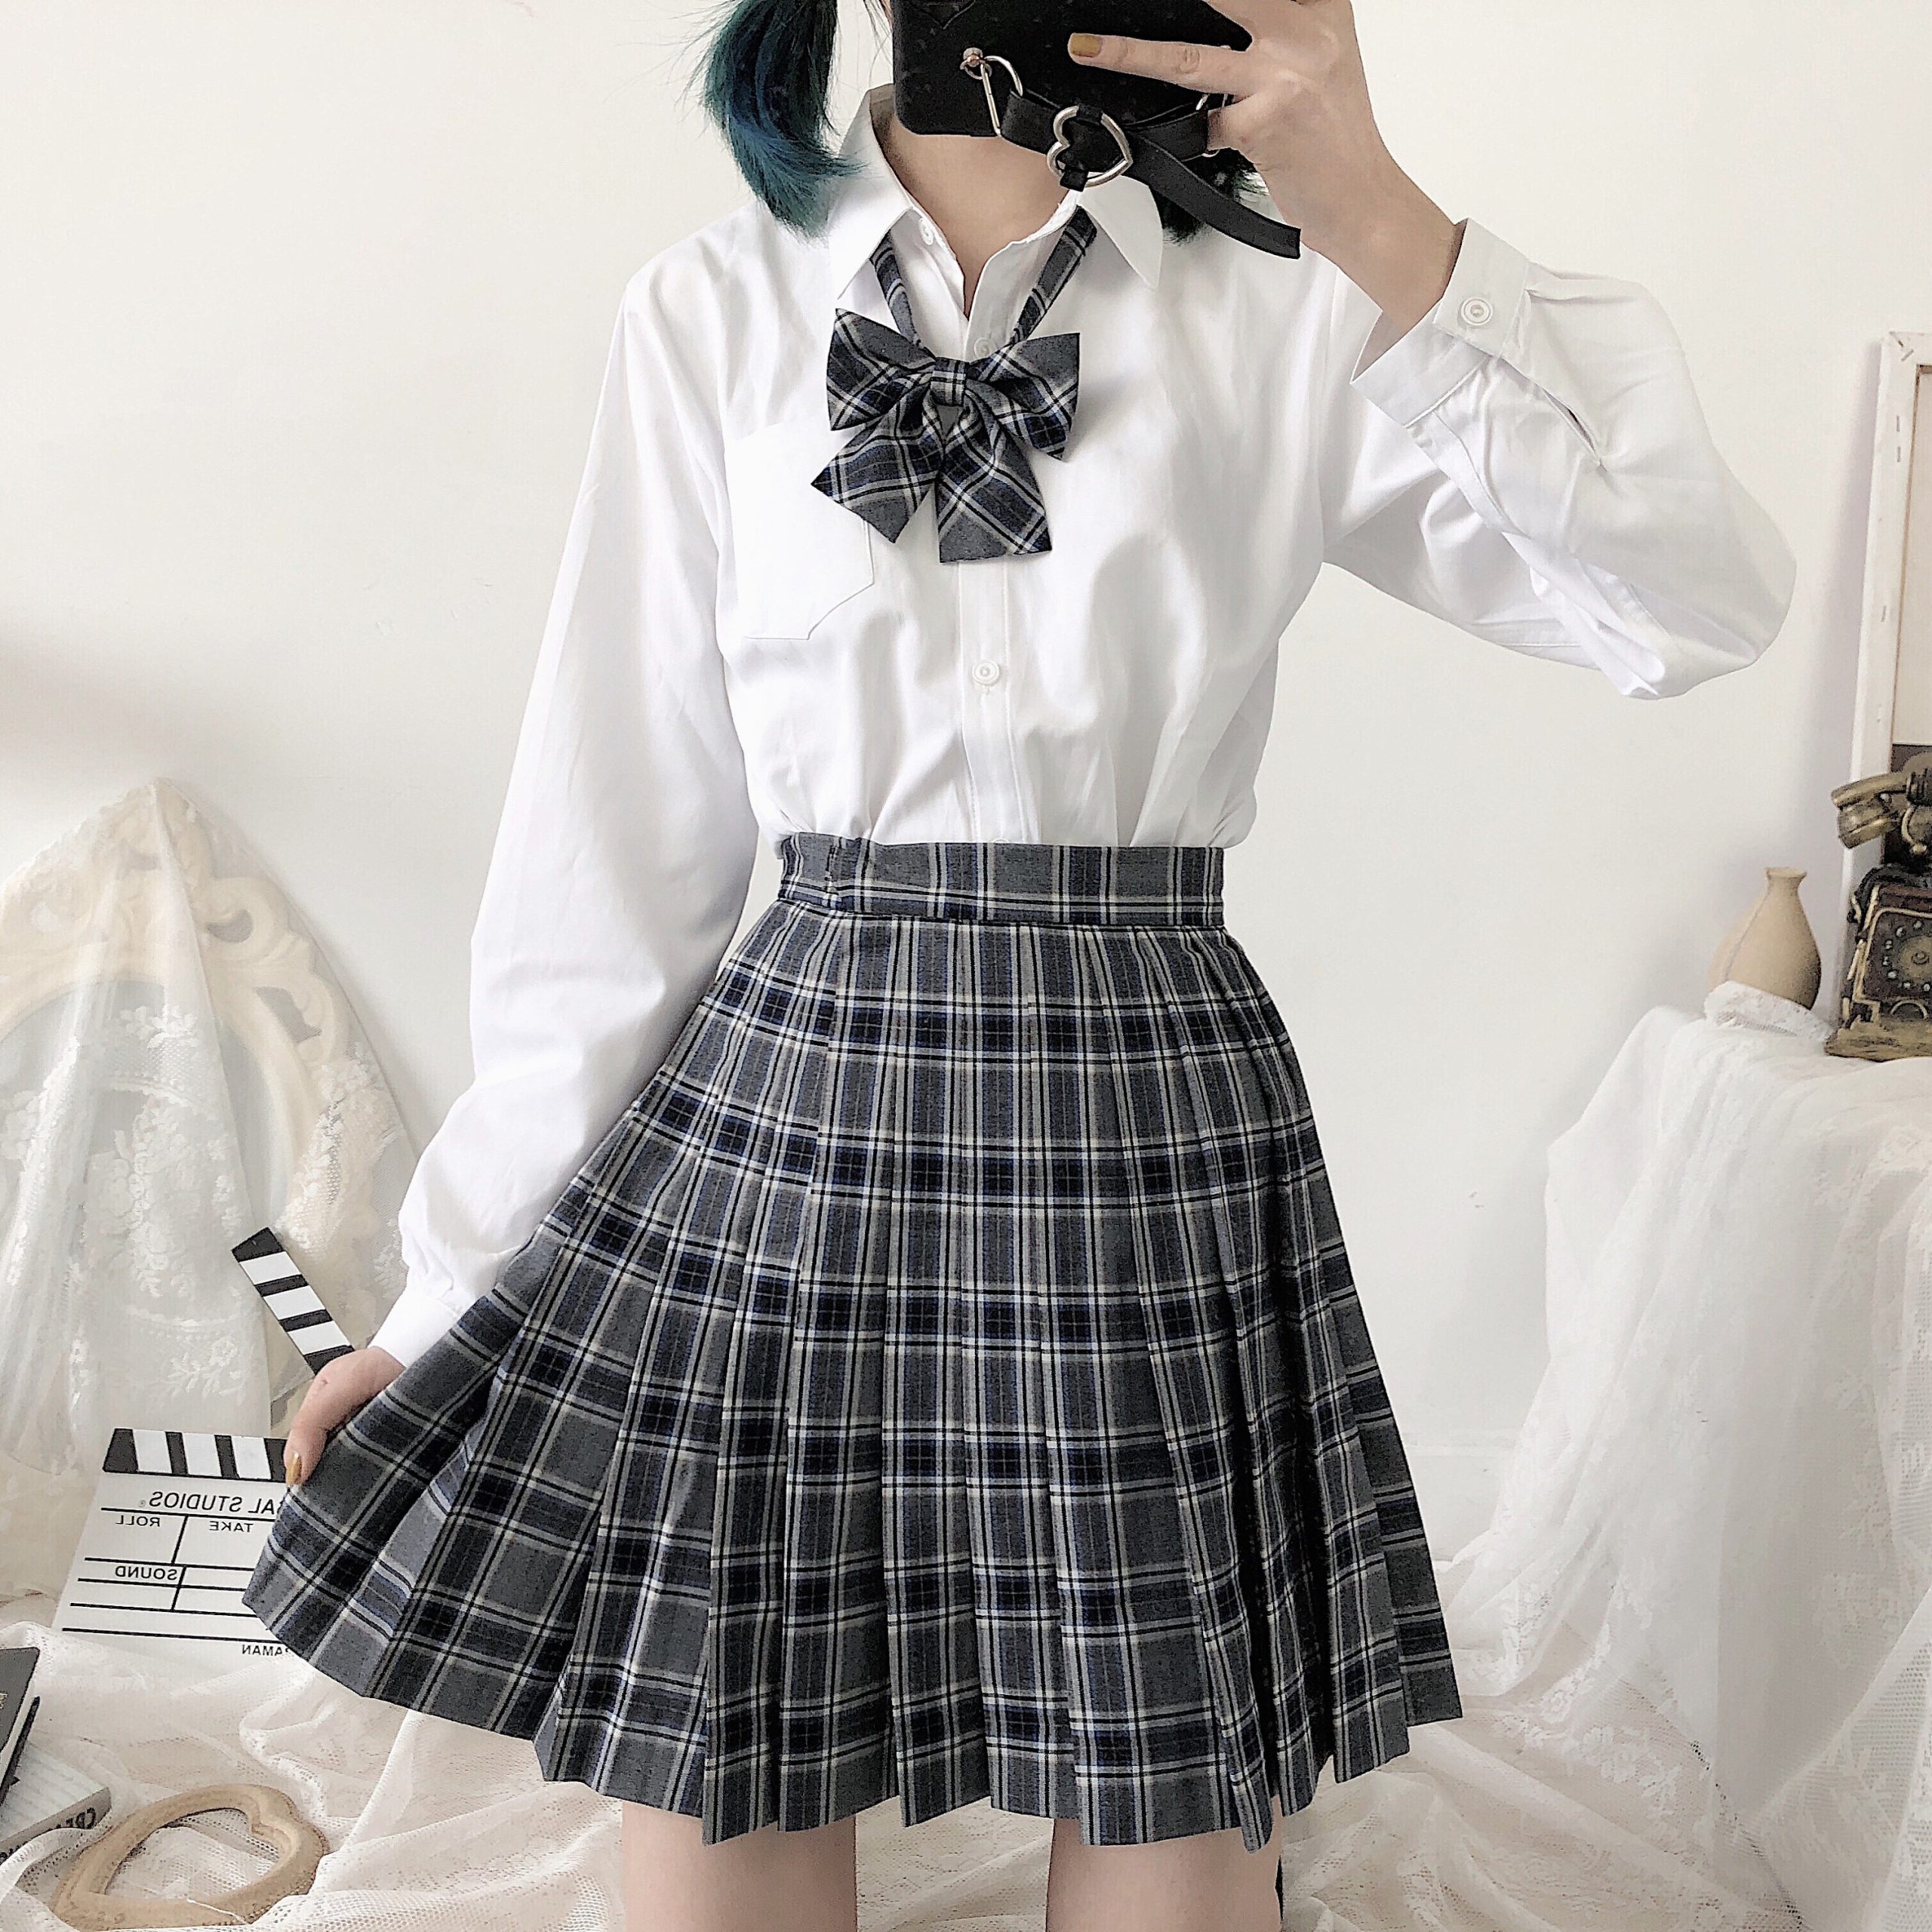 Dark Academia Clothing Harajuku Plaid Mini Skirts For Casual Lady Lolita Fashion High Waist Ruffles Skirts For Your Minimal Style